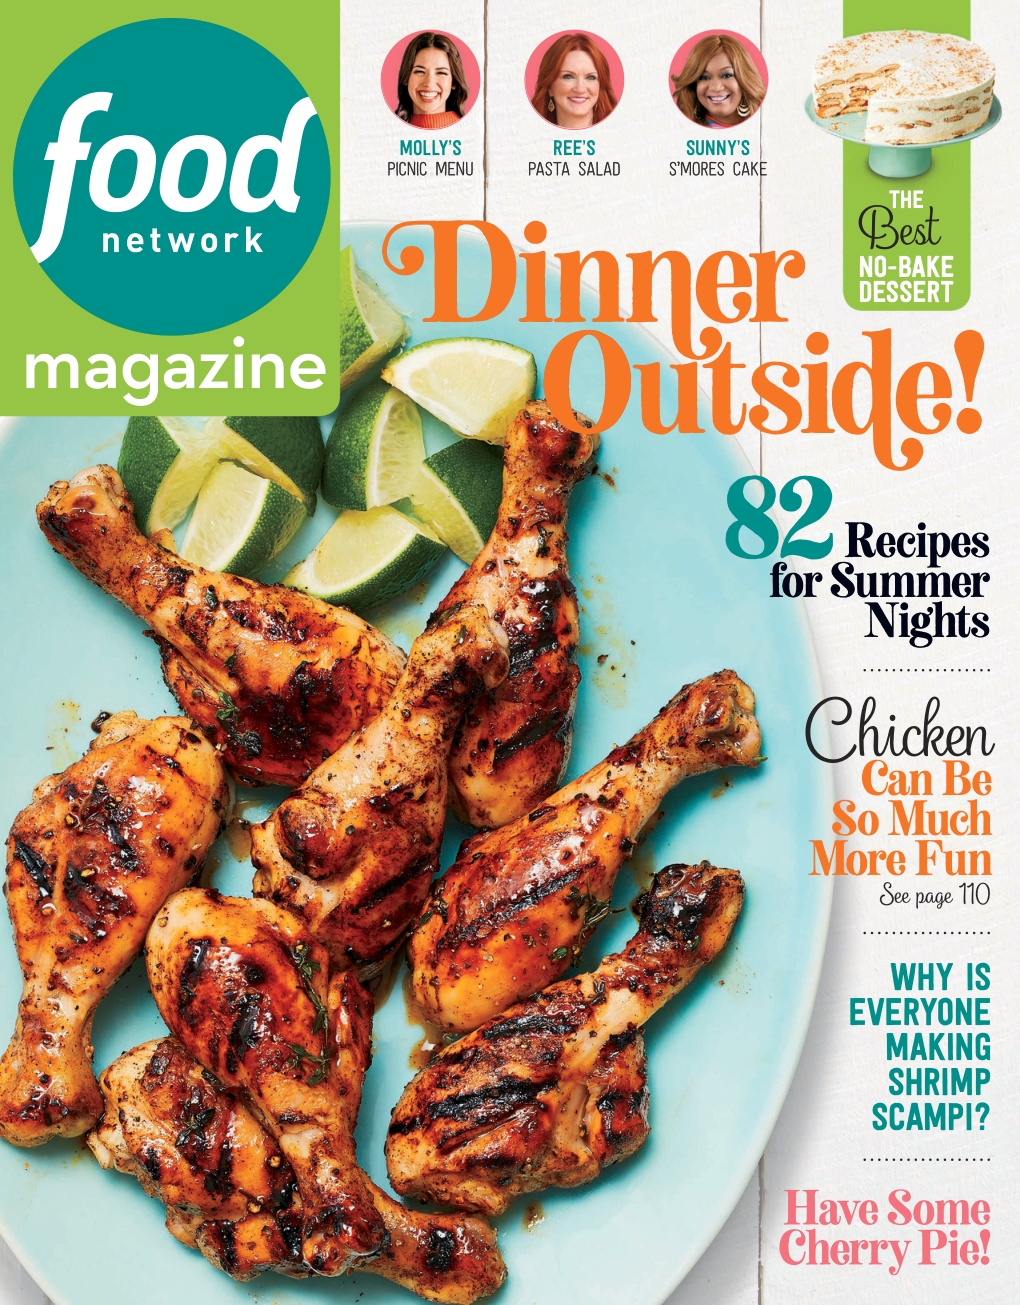 Food Network Magazine - image 1 of 2